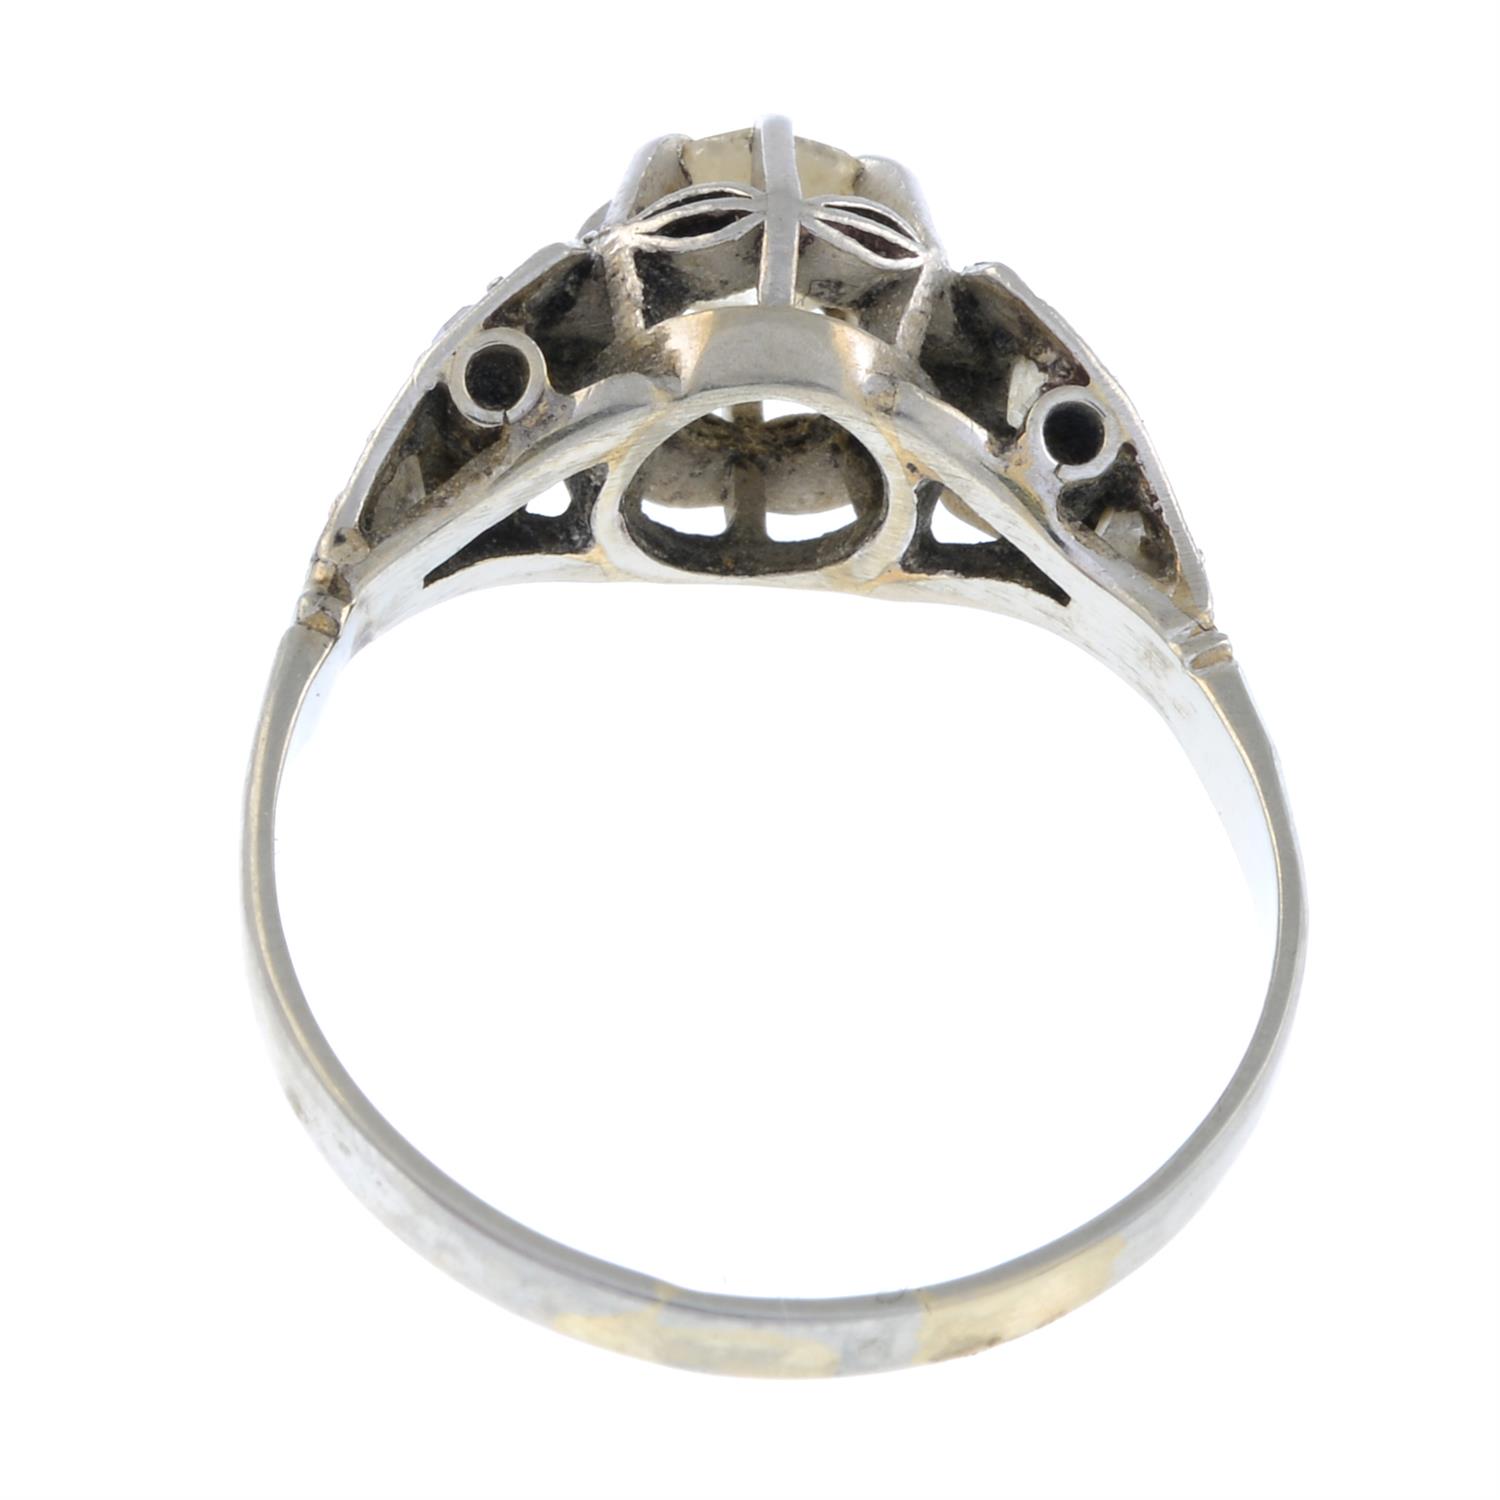 Diamond dress ring - Image 2 of 2